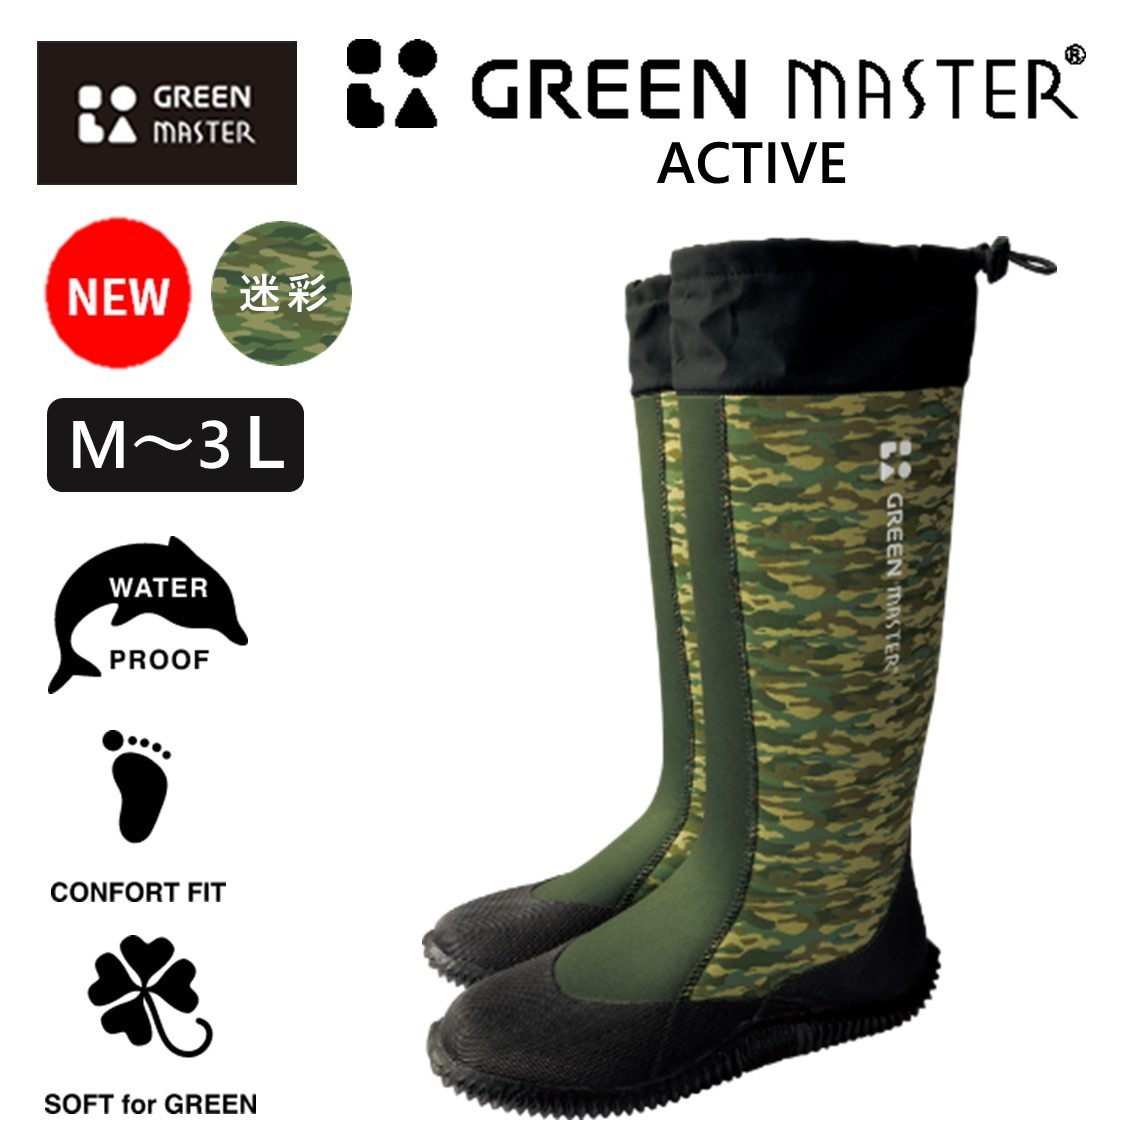  boots work outdoor green master waterproof agriculture gardening active Atom 2628 rain shoes gardening rain shoes fishing trekking 